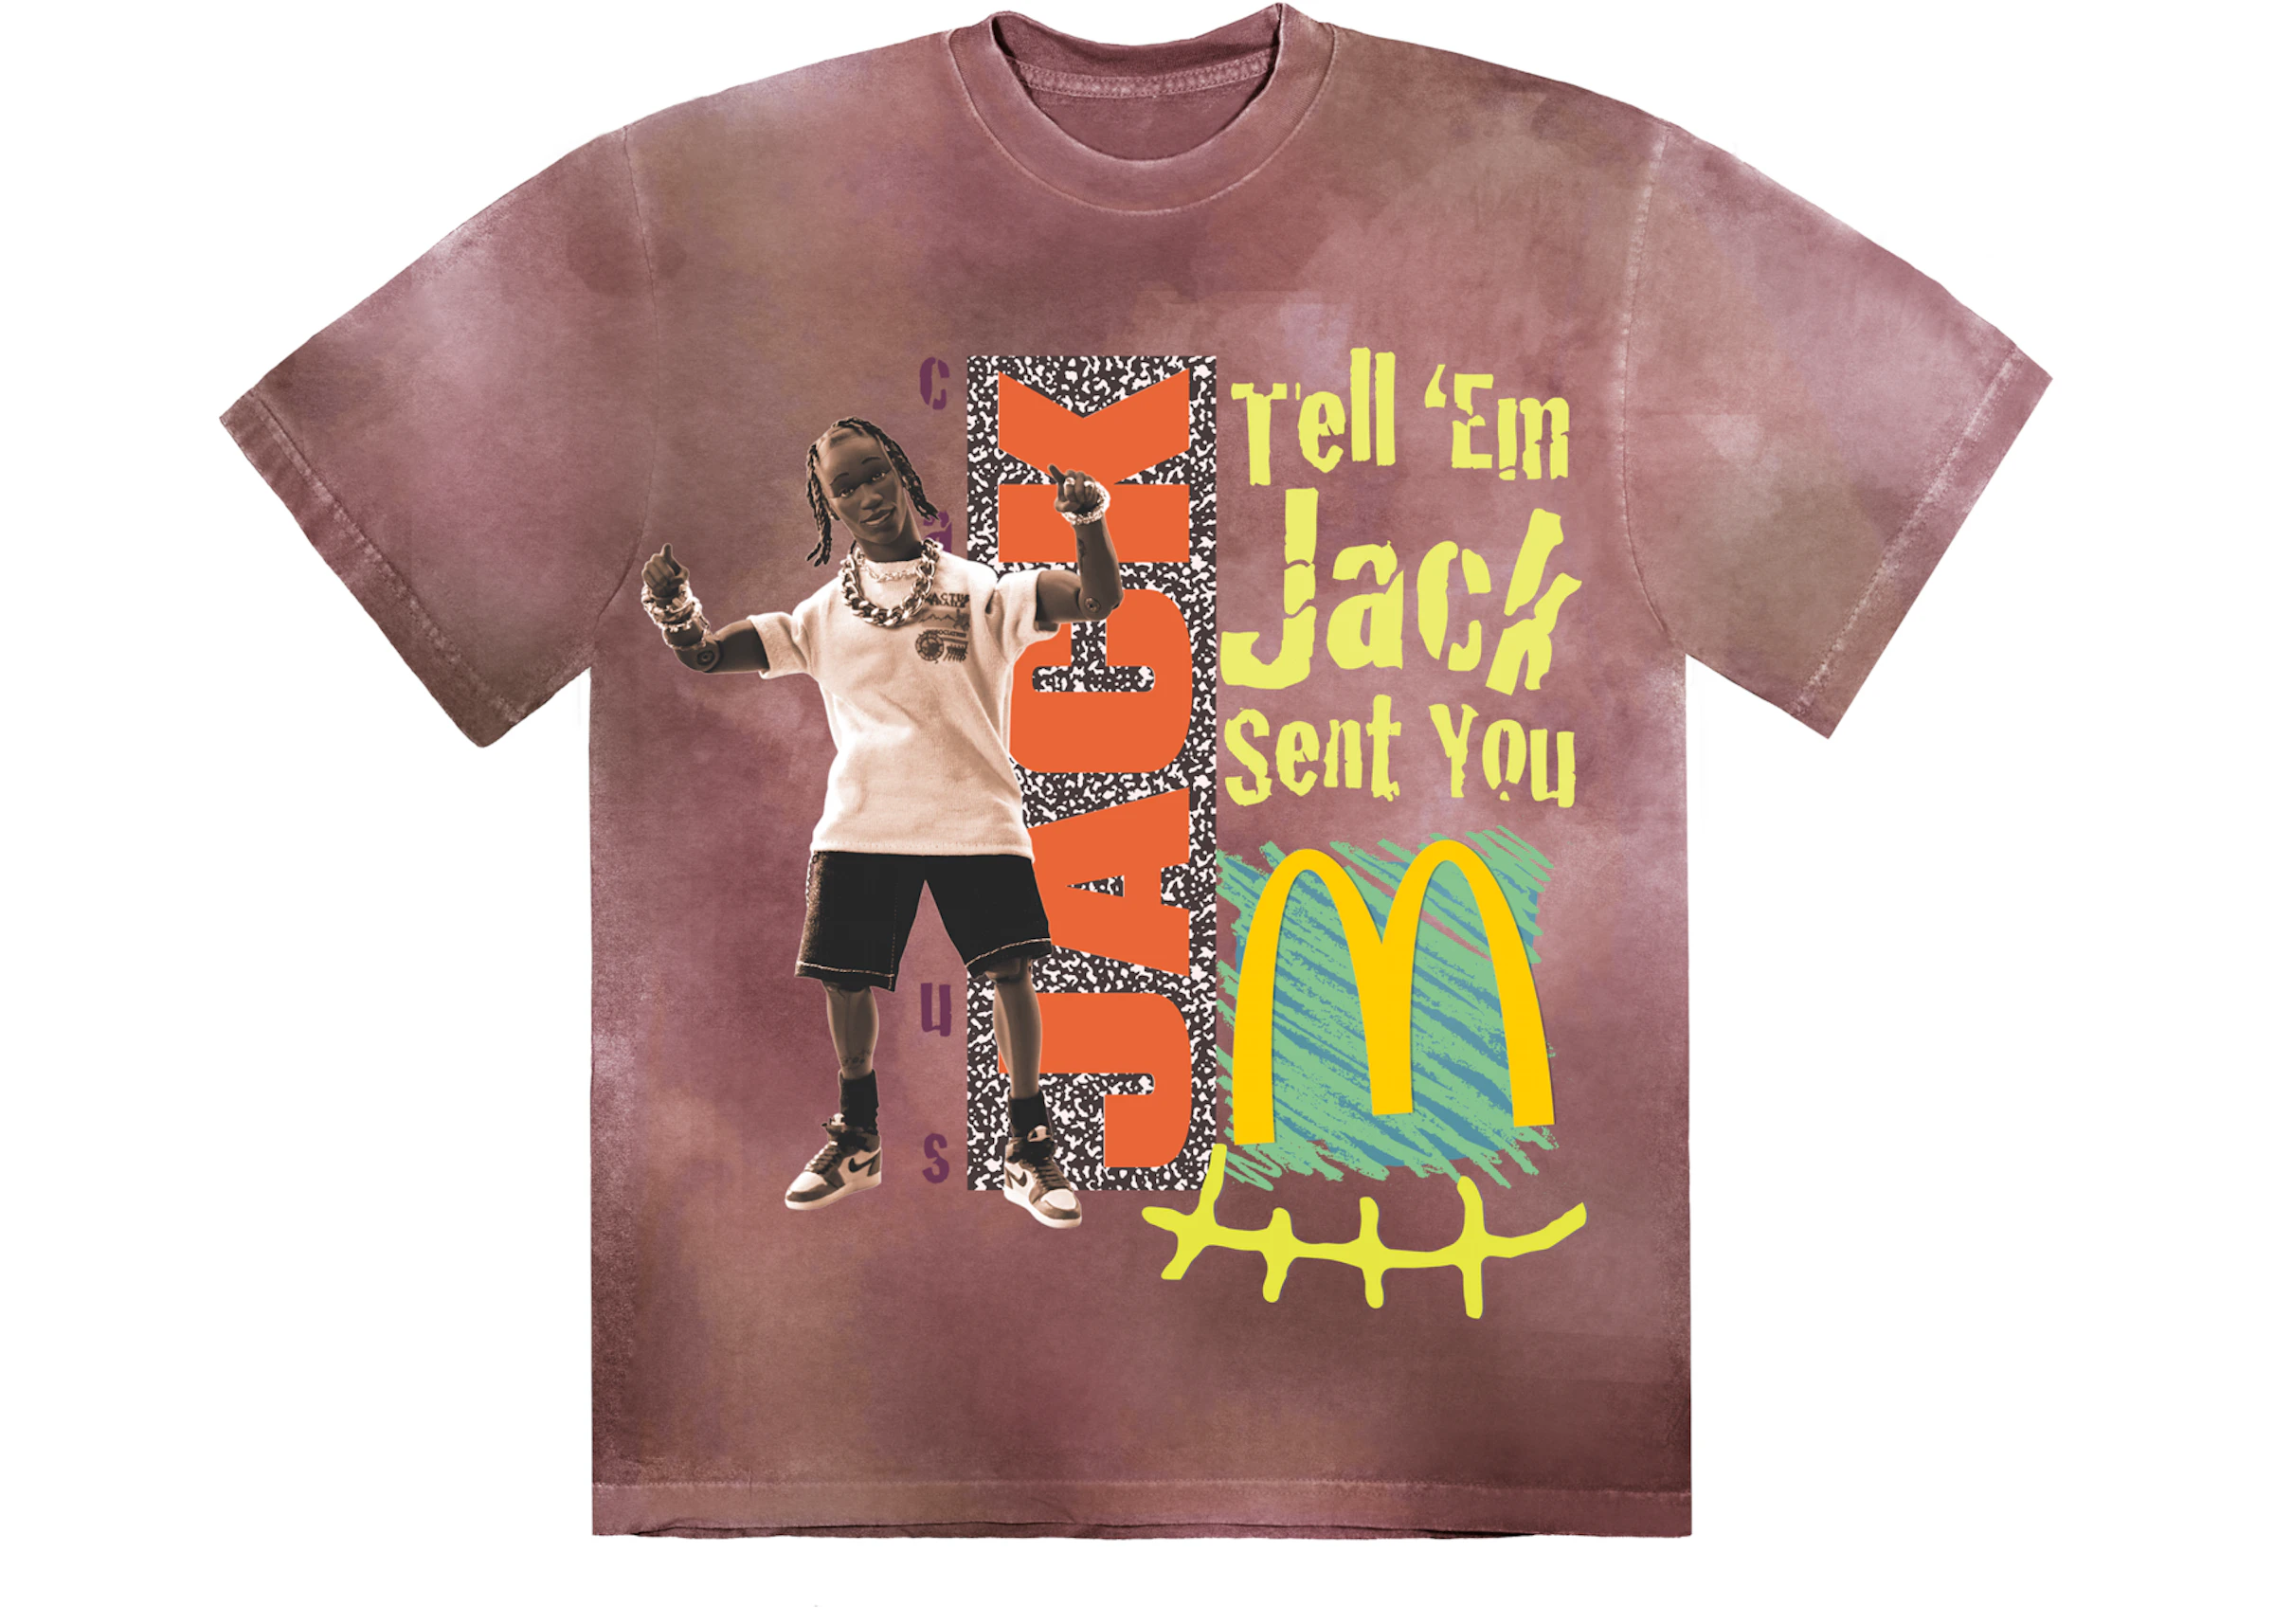 Travis Scott x McDonald's Jack Smile II T-Shirt Berry - FW20 - US